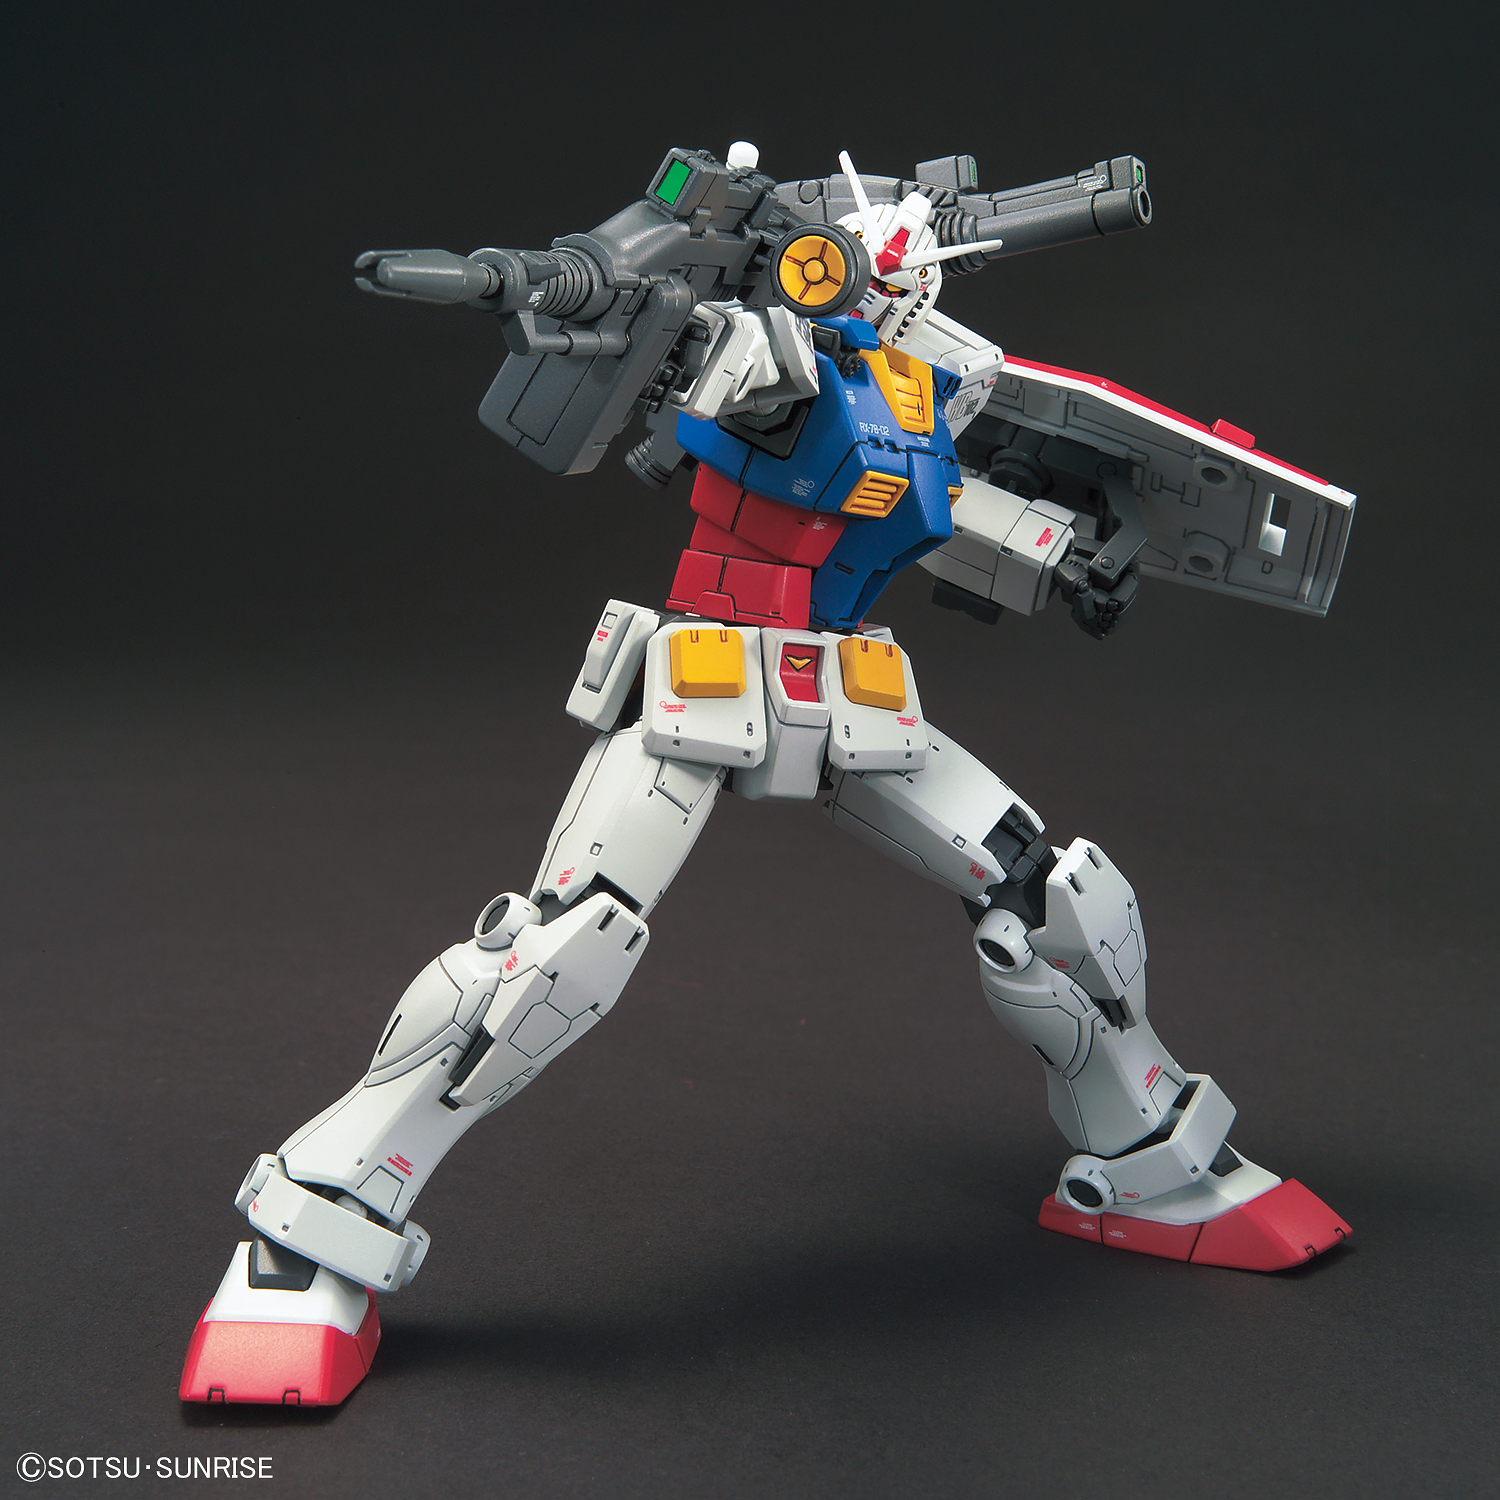 HG Gundam RX-78-02 Origin Ver. 1/144 (Bandai)